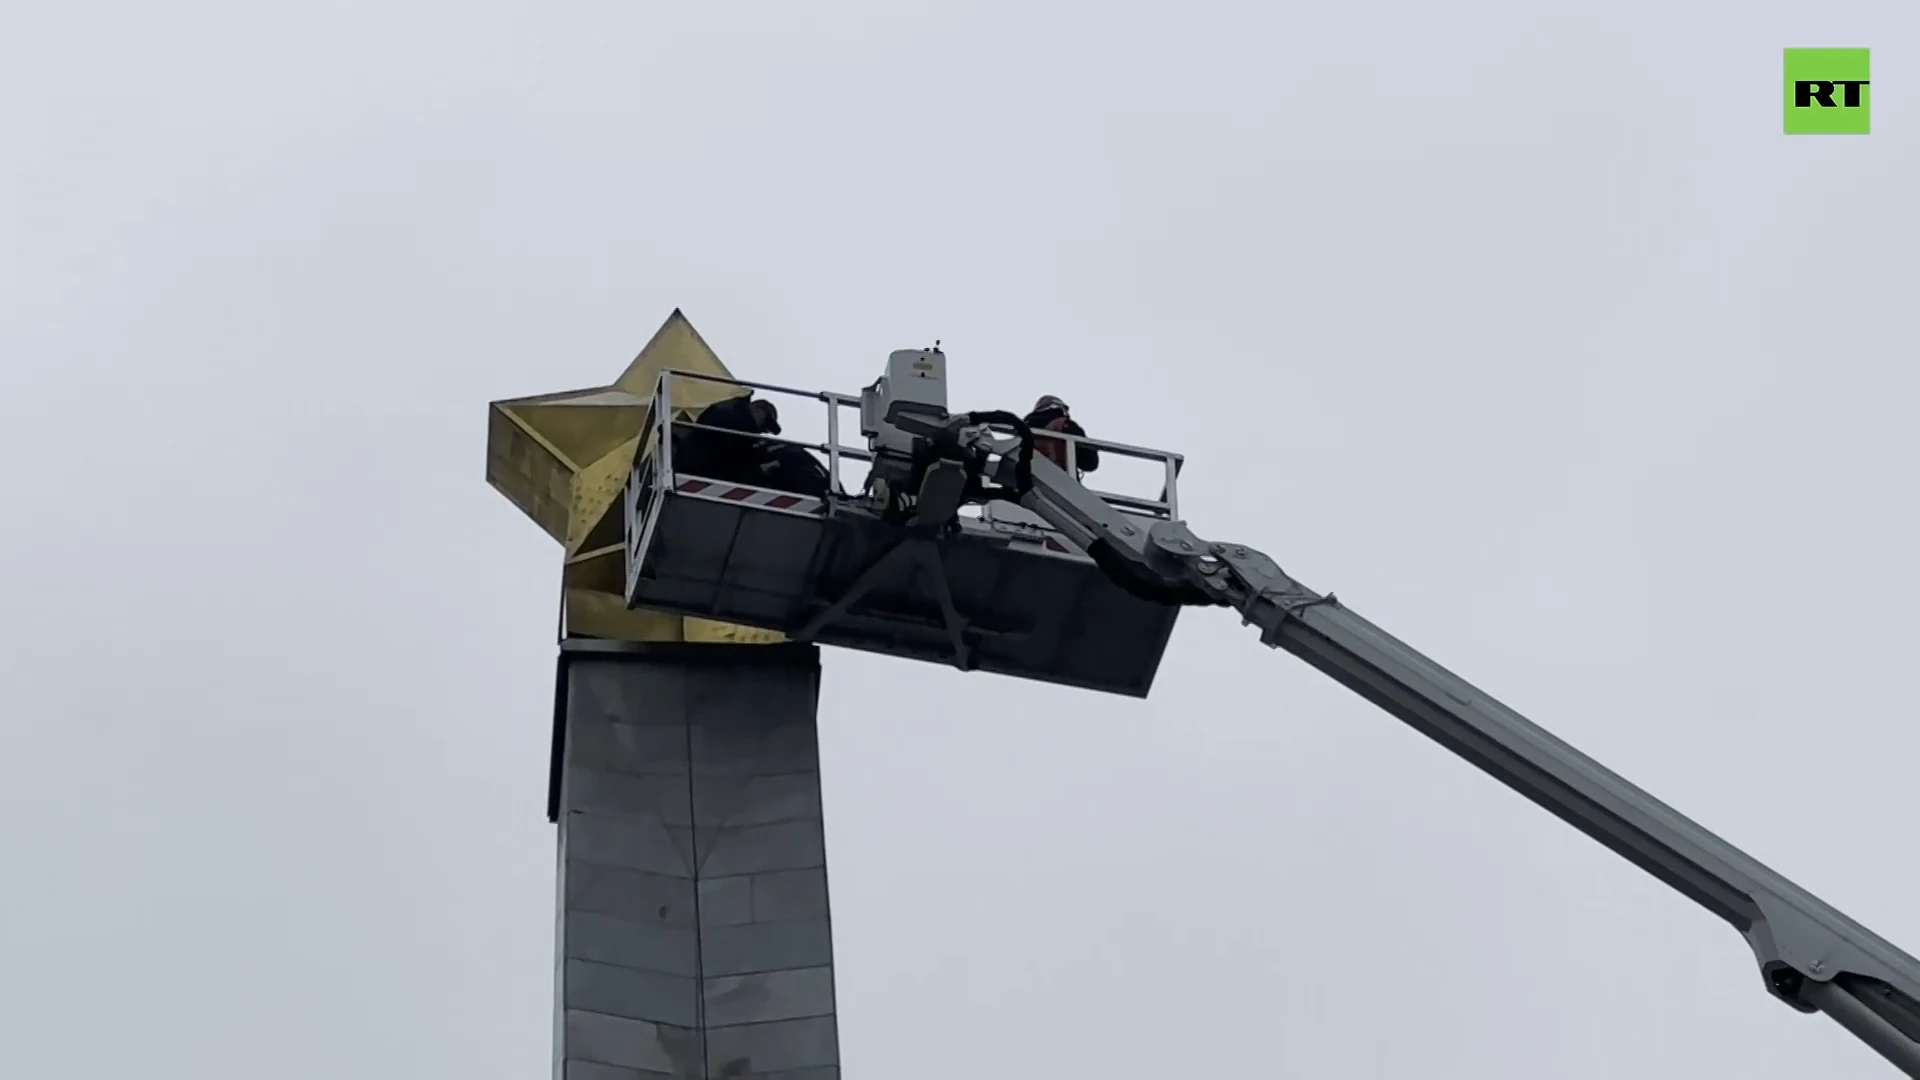 Kiev dismantles symbol of Nazi defeat